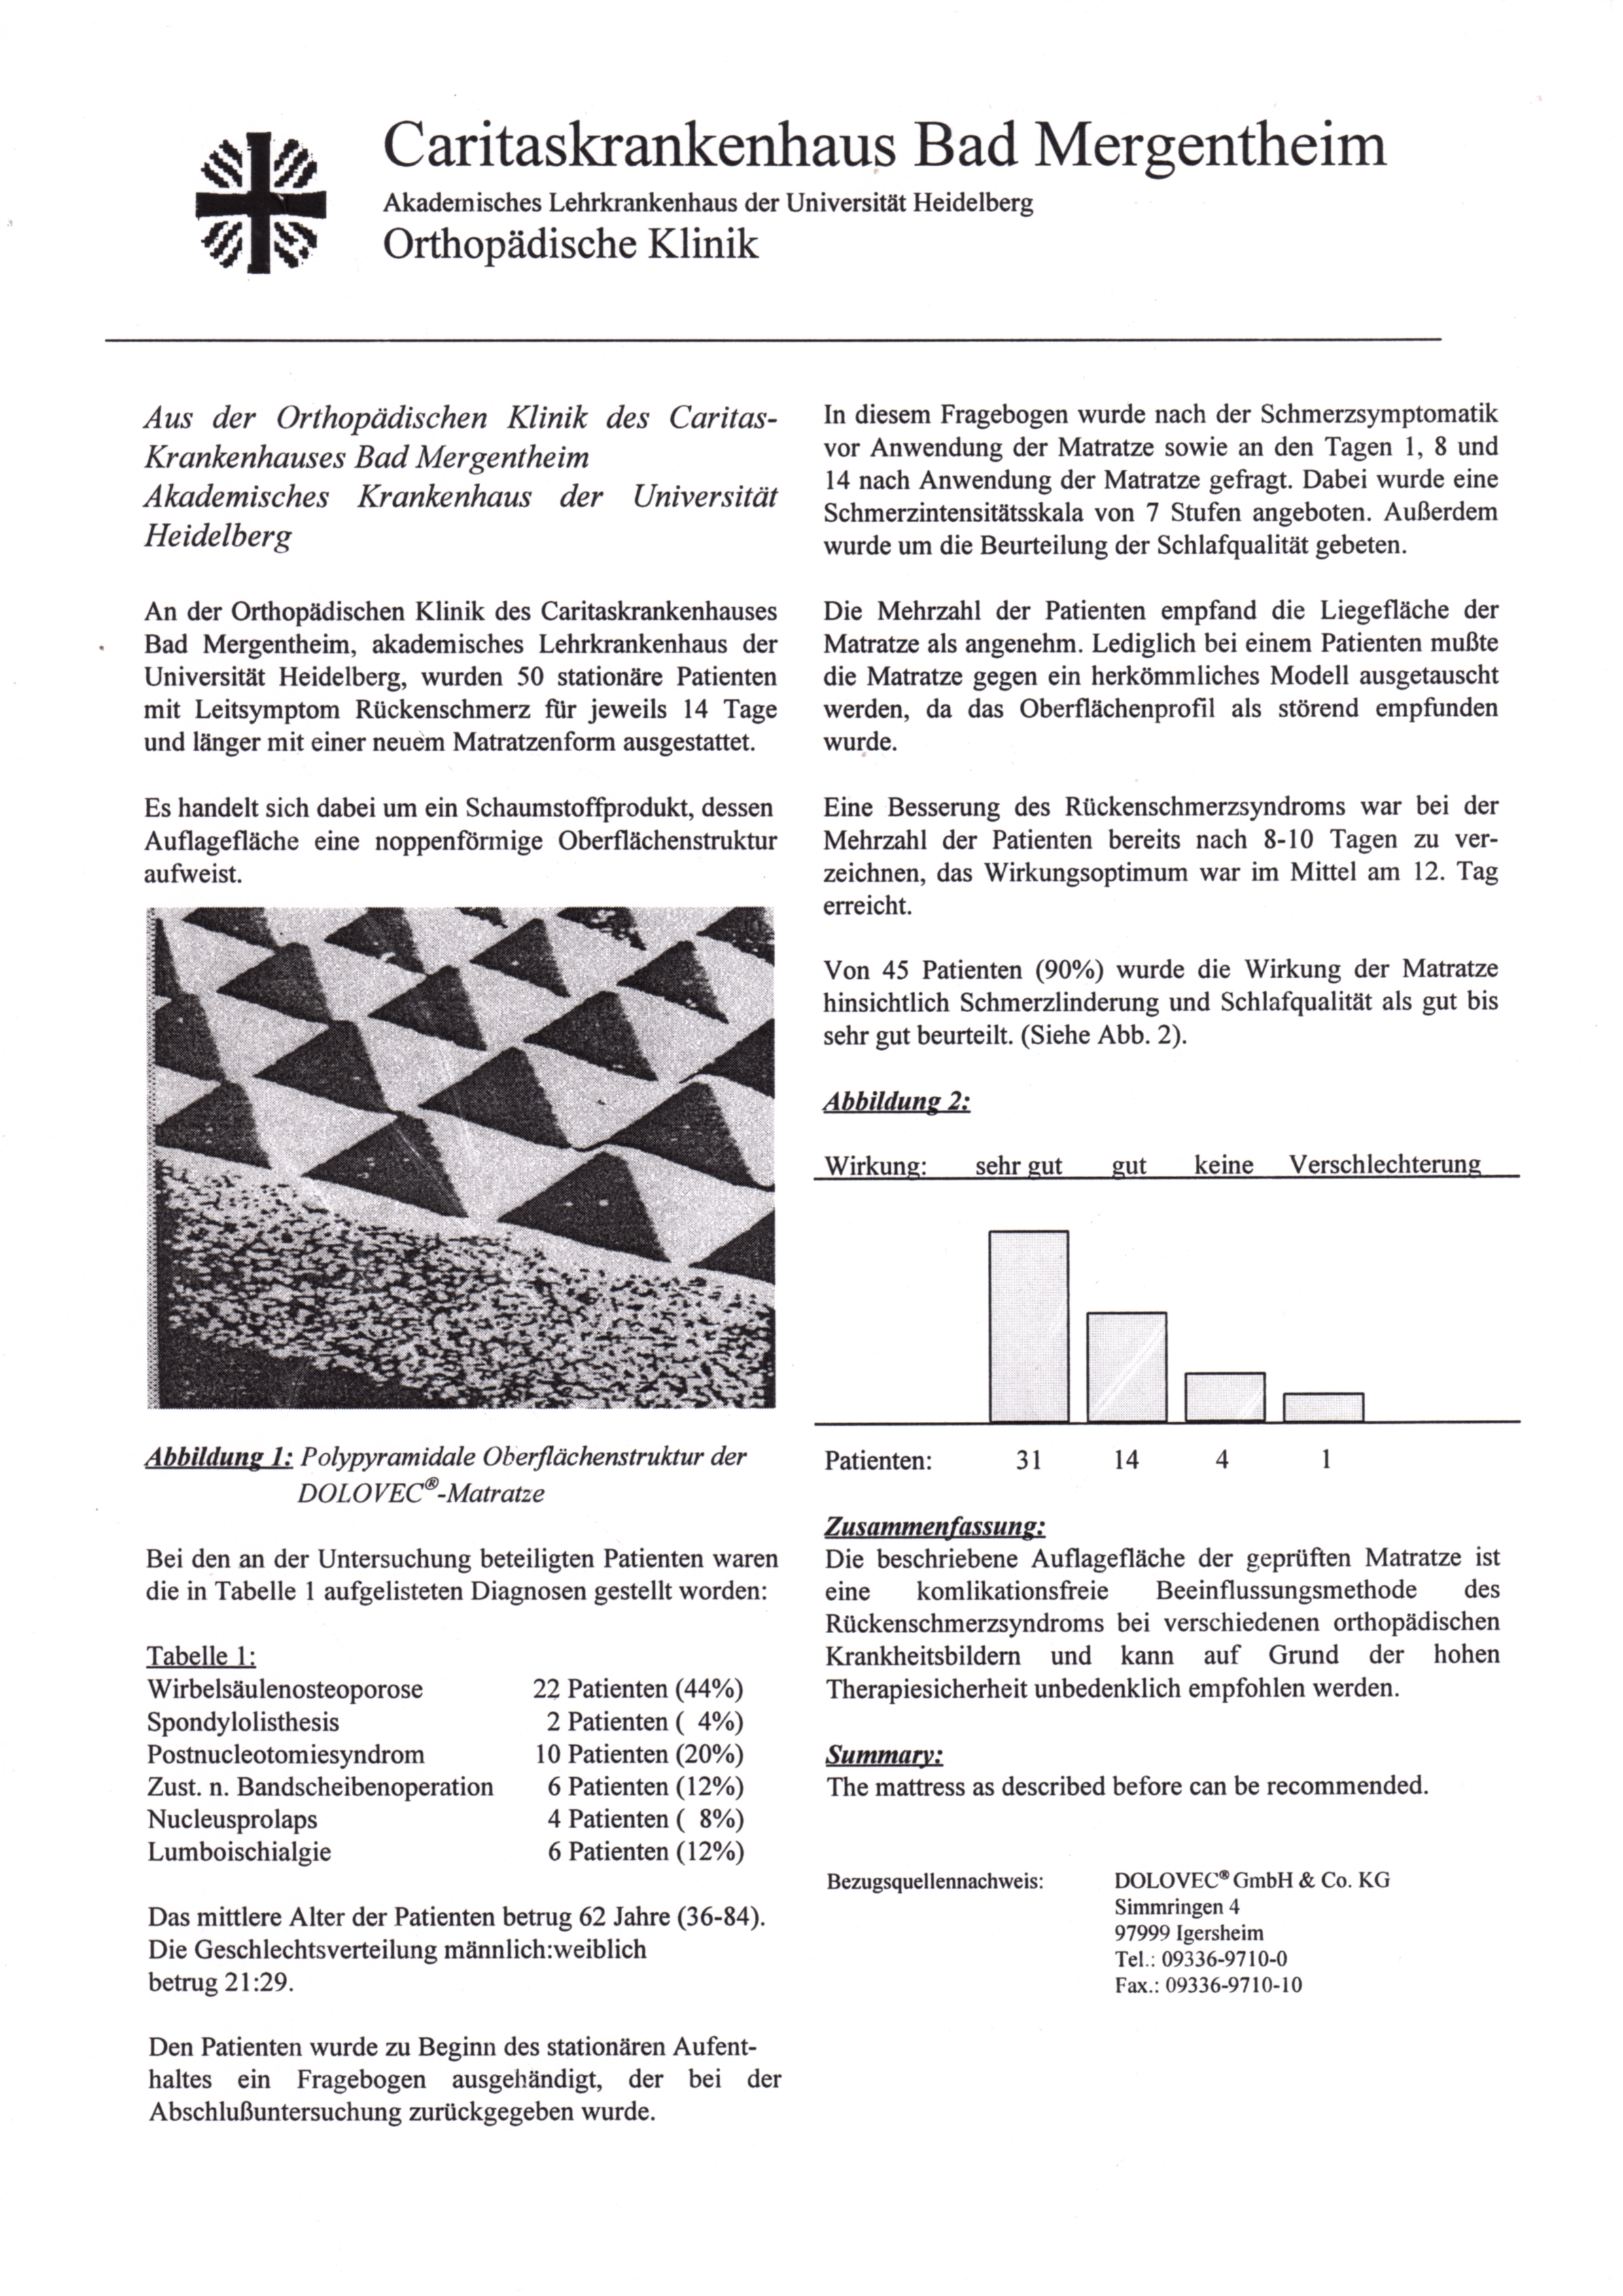 Publication of general medicine - April 1987